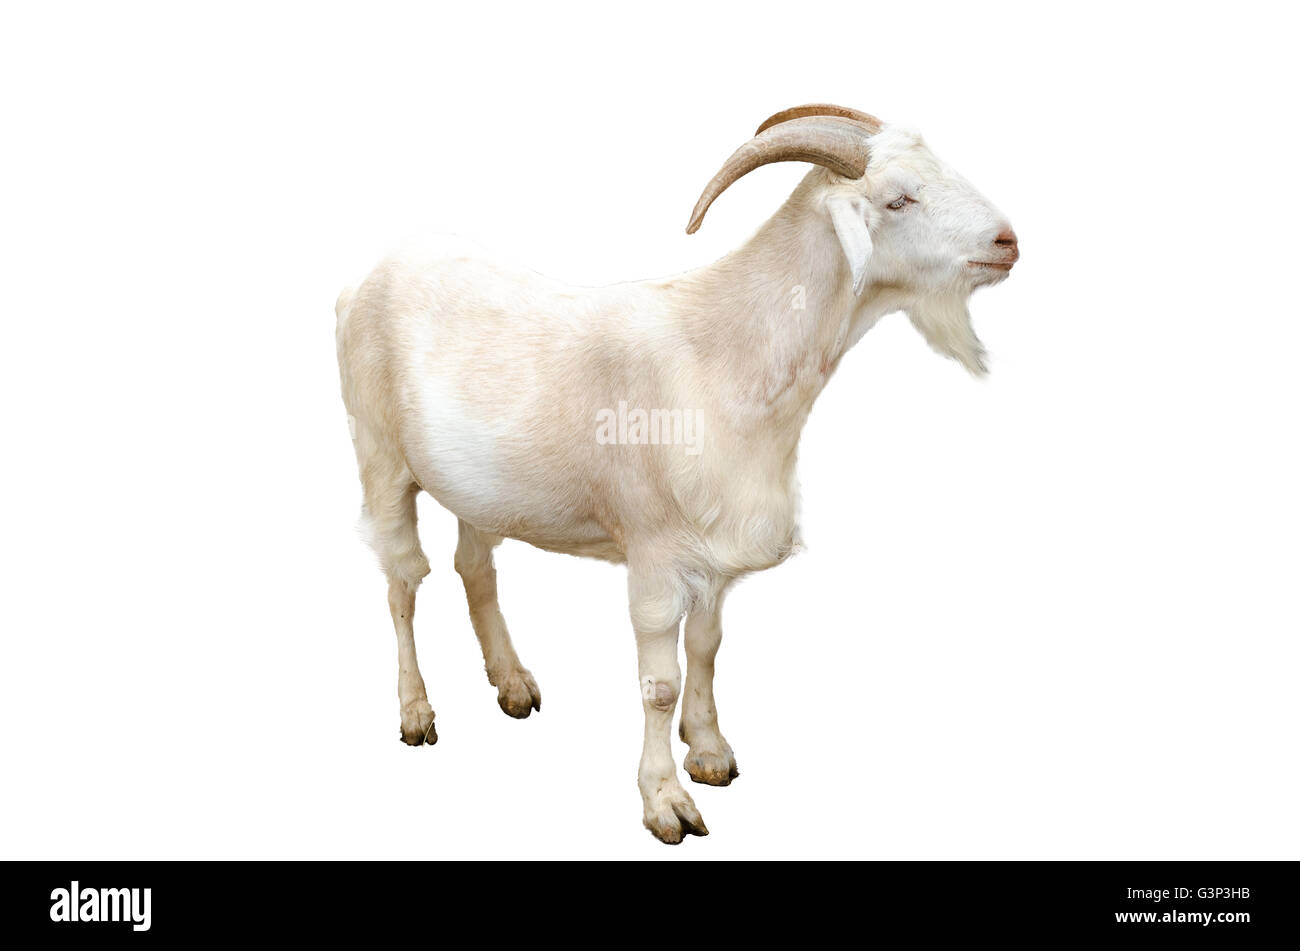 Portrait of white goat close-up, isolated on white background. Stock Photo